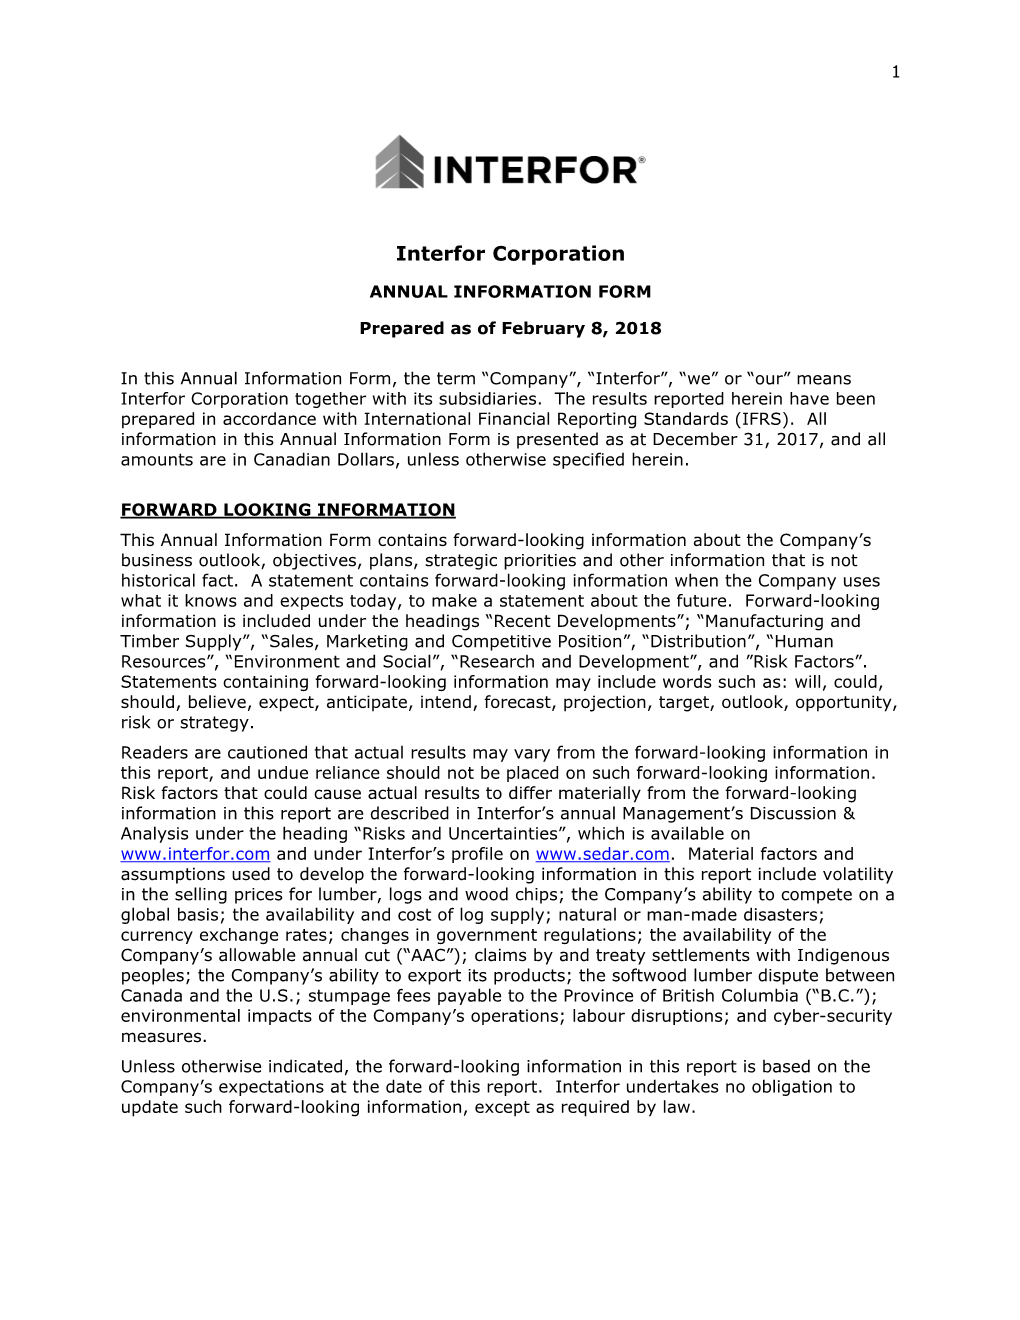 Interfor Corporation